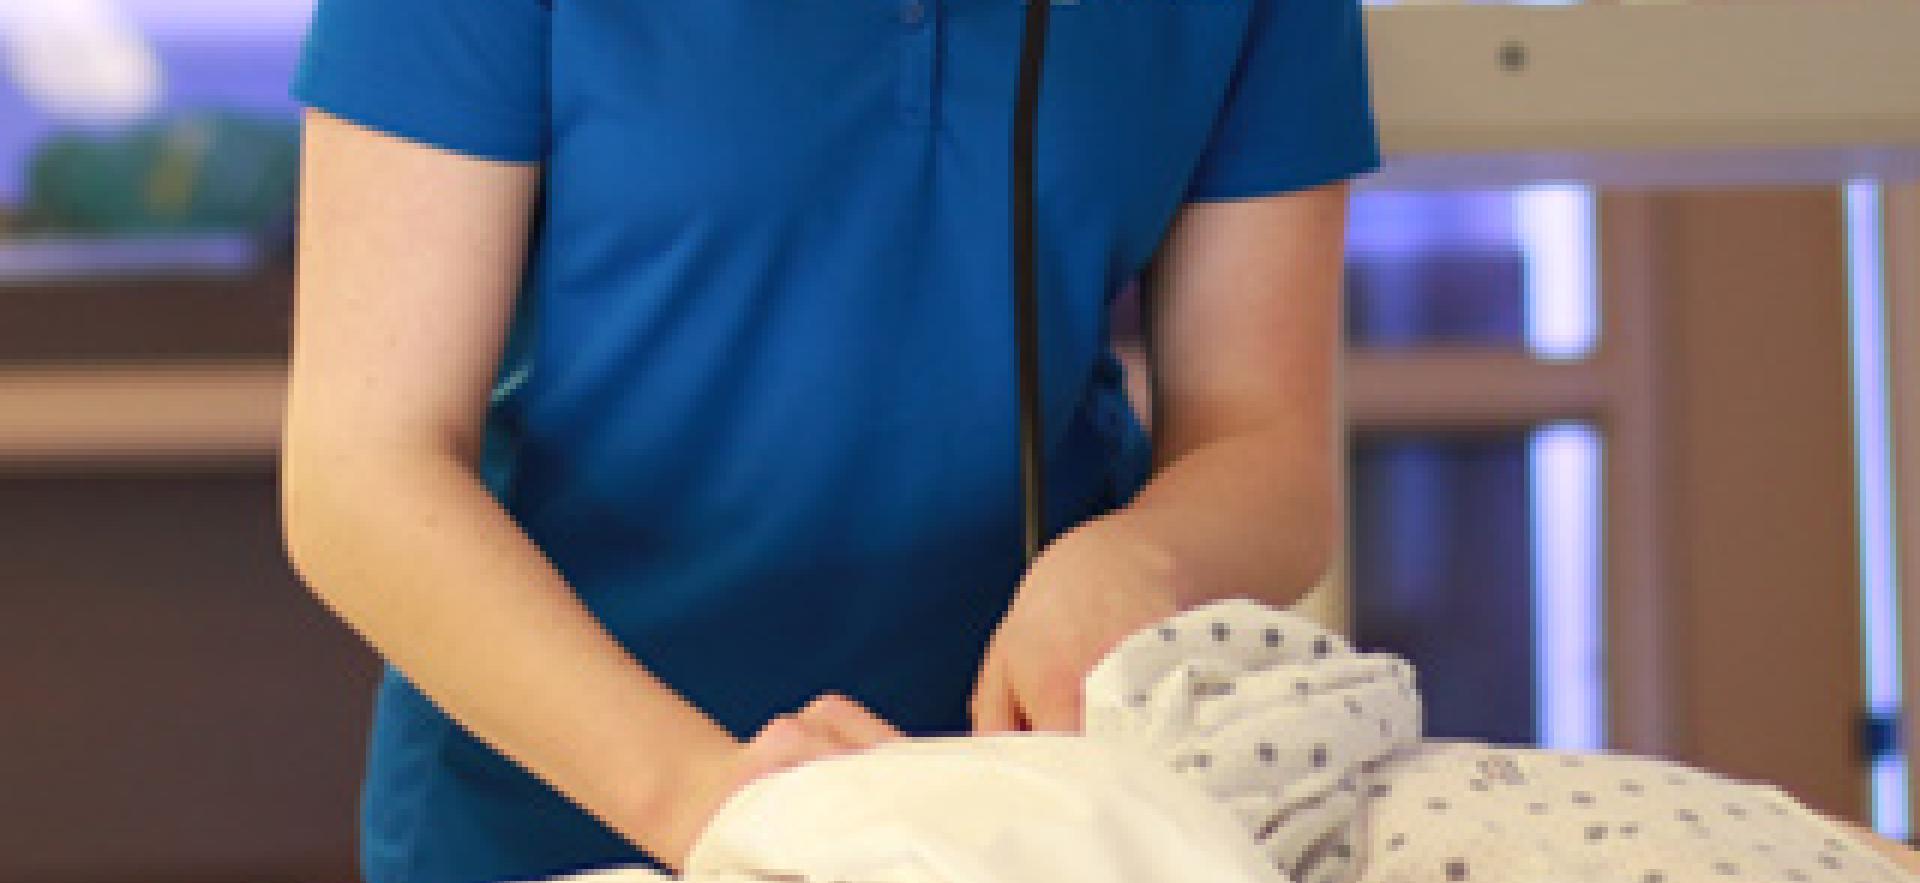 Nursing student with stethoscope assessing mannequin in nursing sim lab